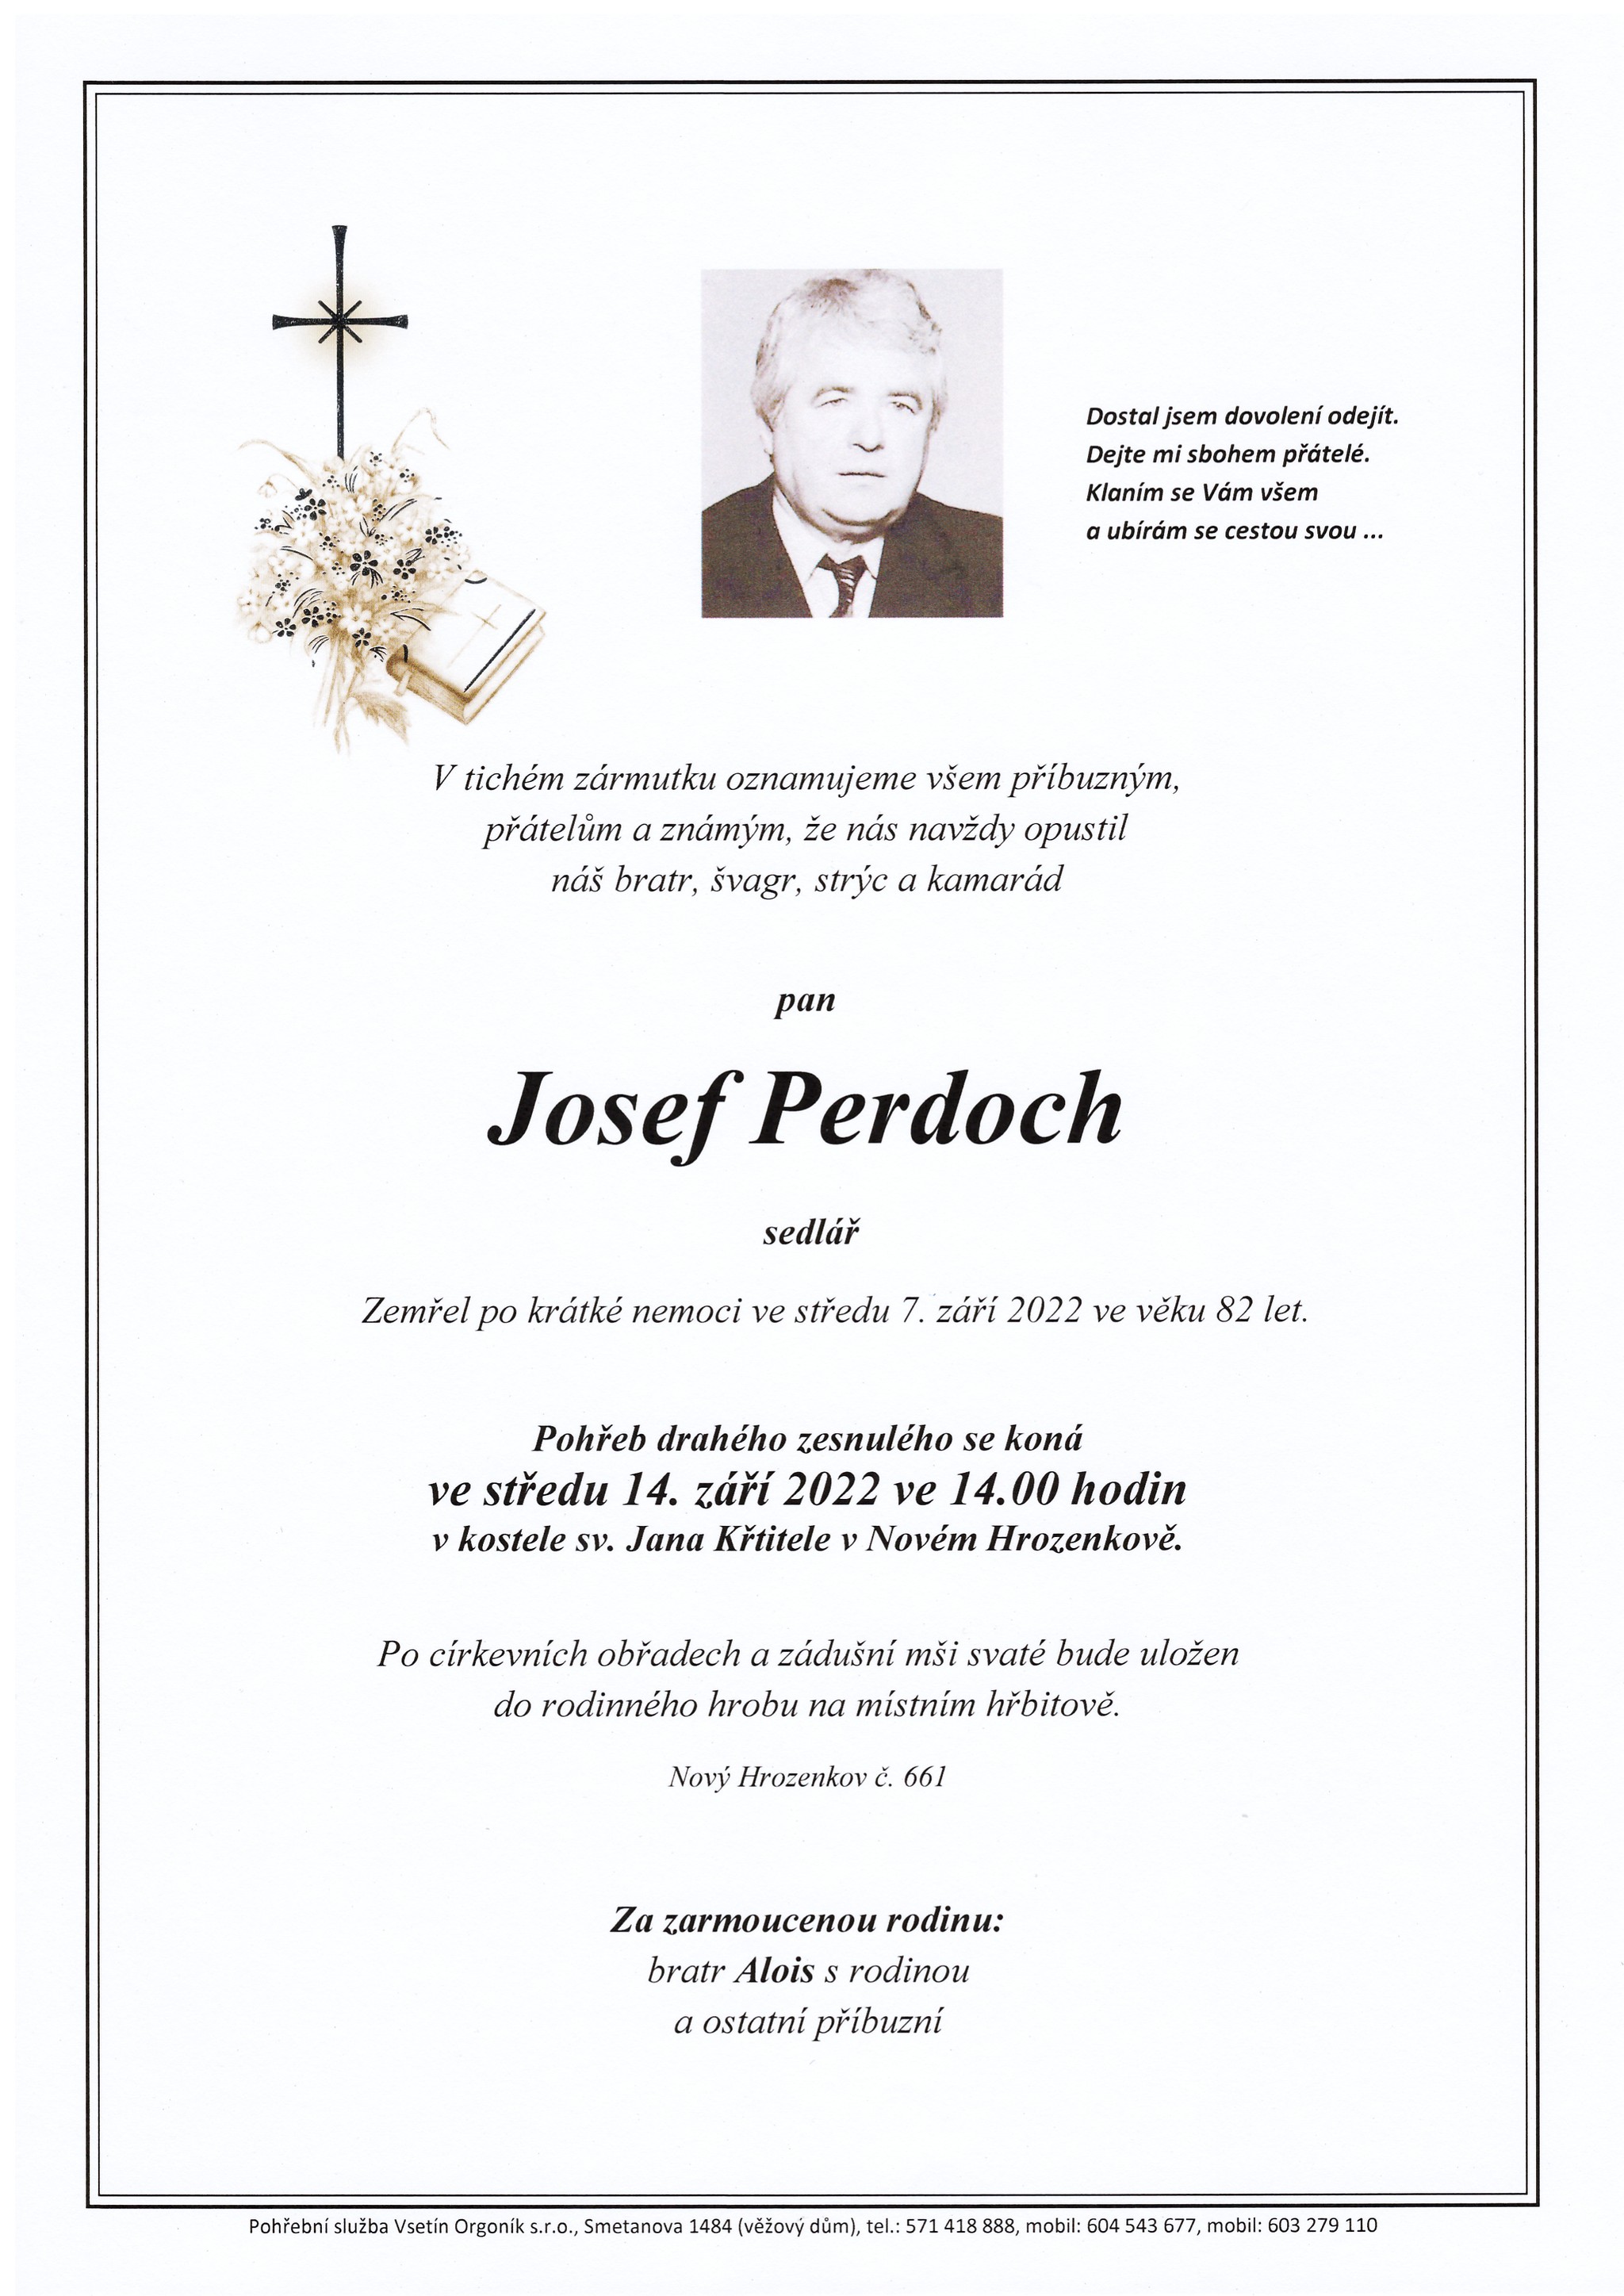 Josef Perdoch